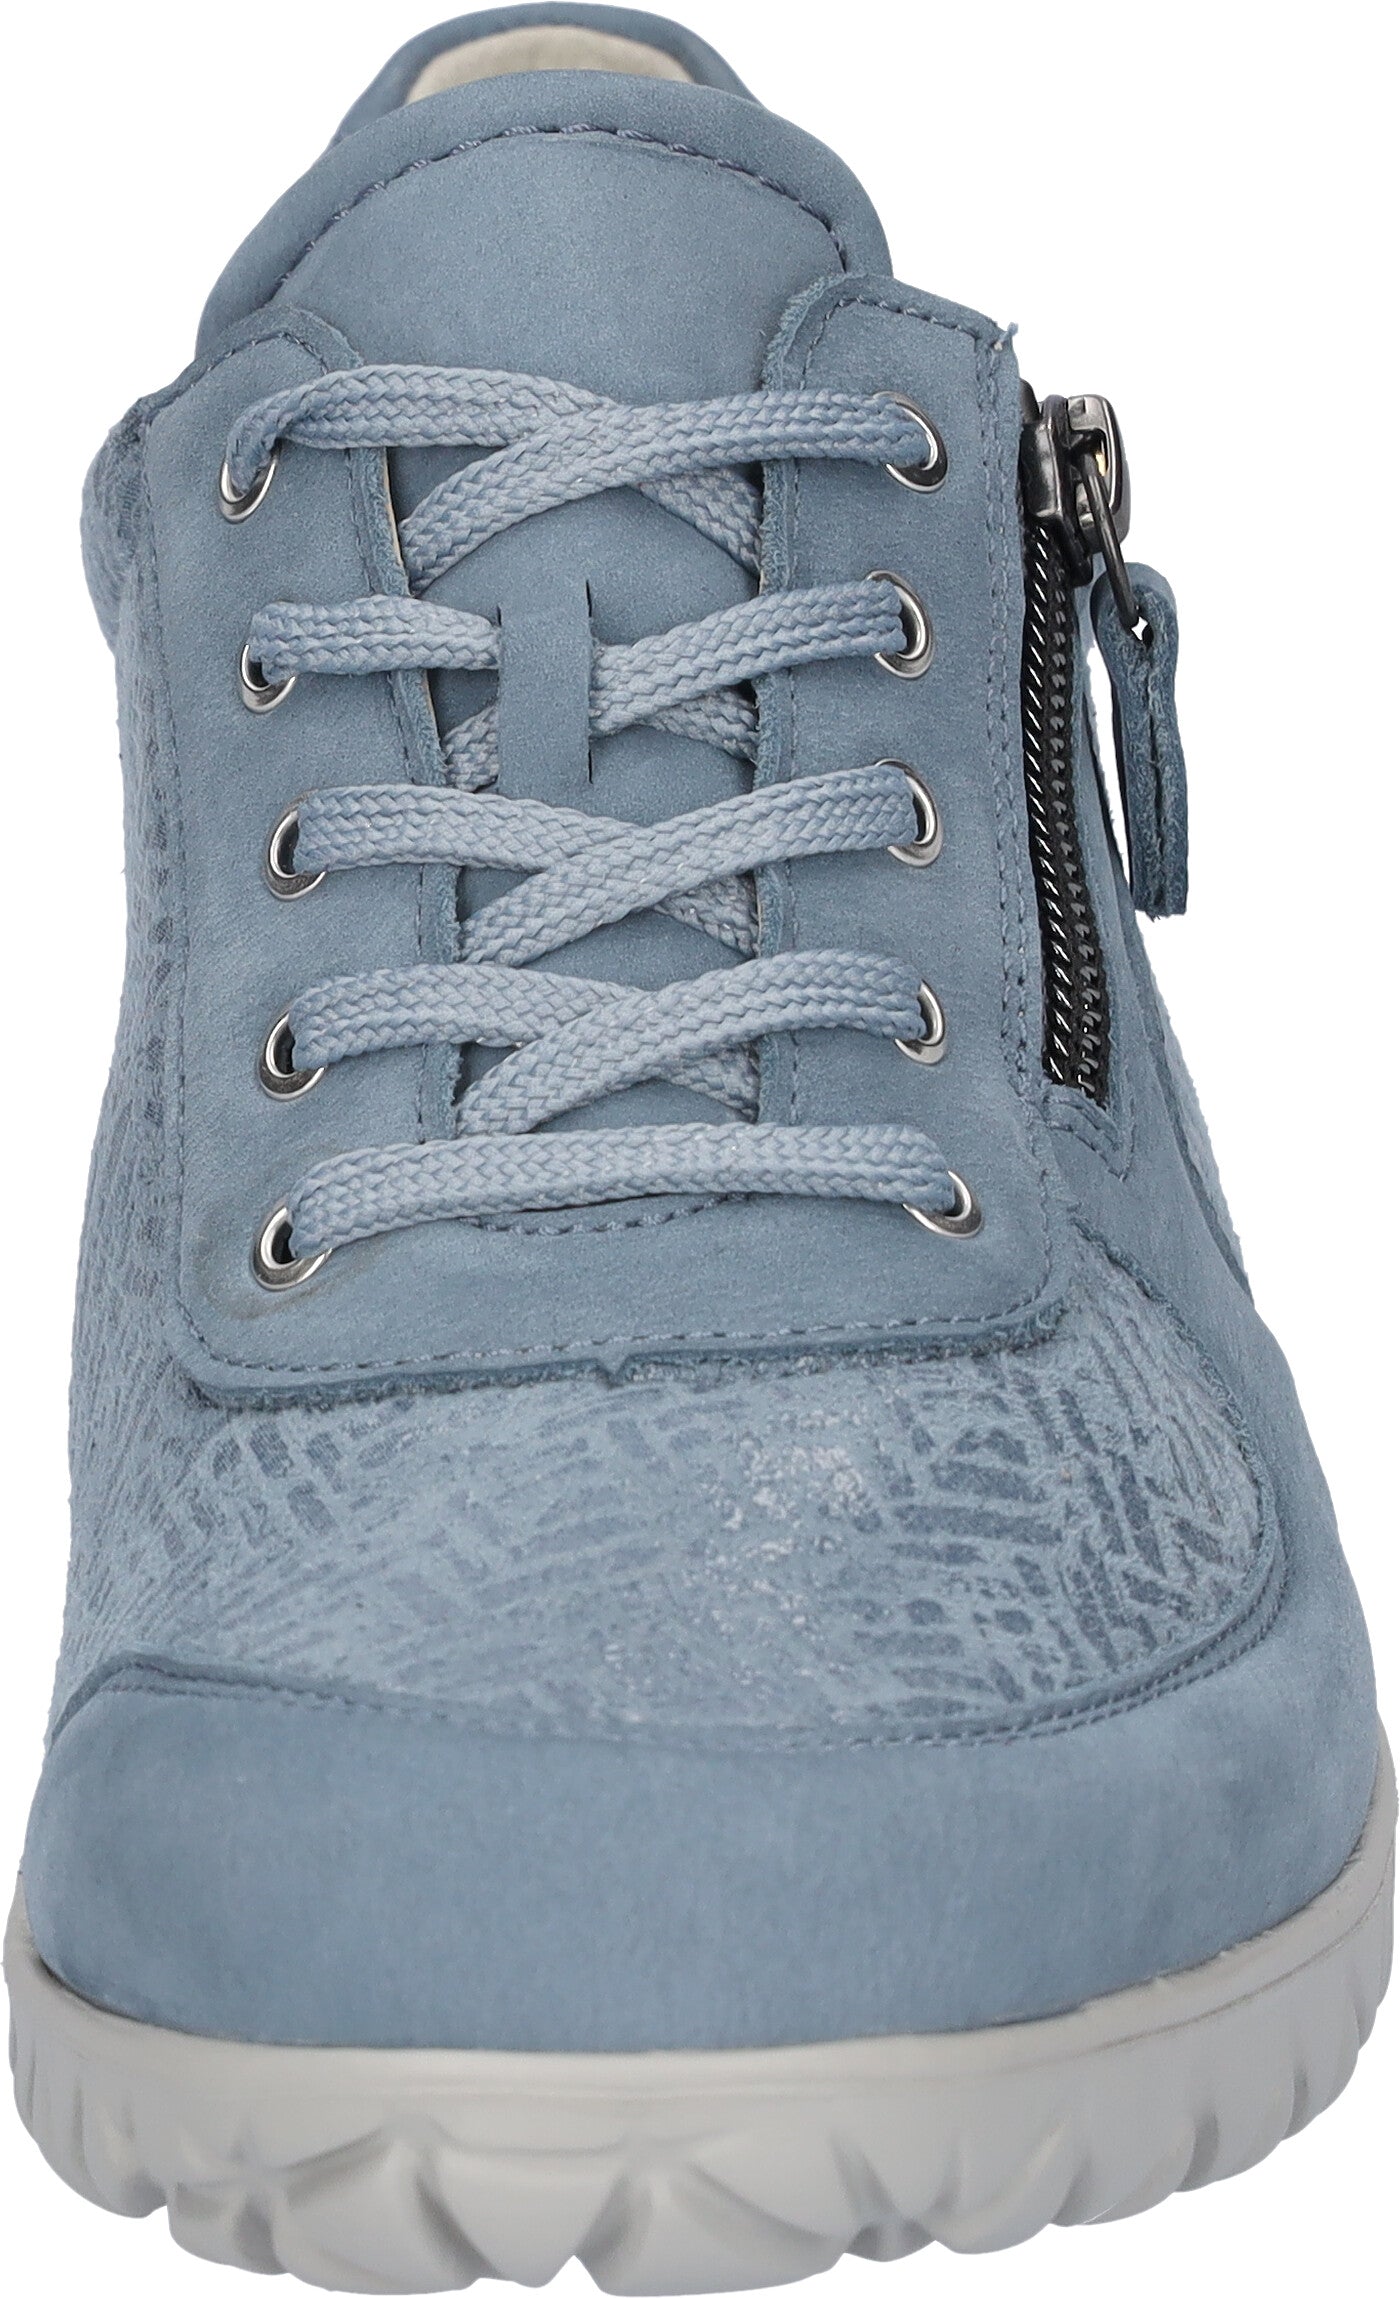 Waldlaufer H89001 227 263 Havy Soft Ladies Denim Blue Nubuck Arch Support Slip On Shoes